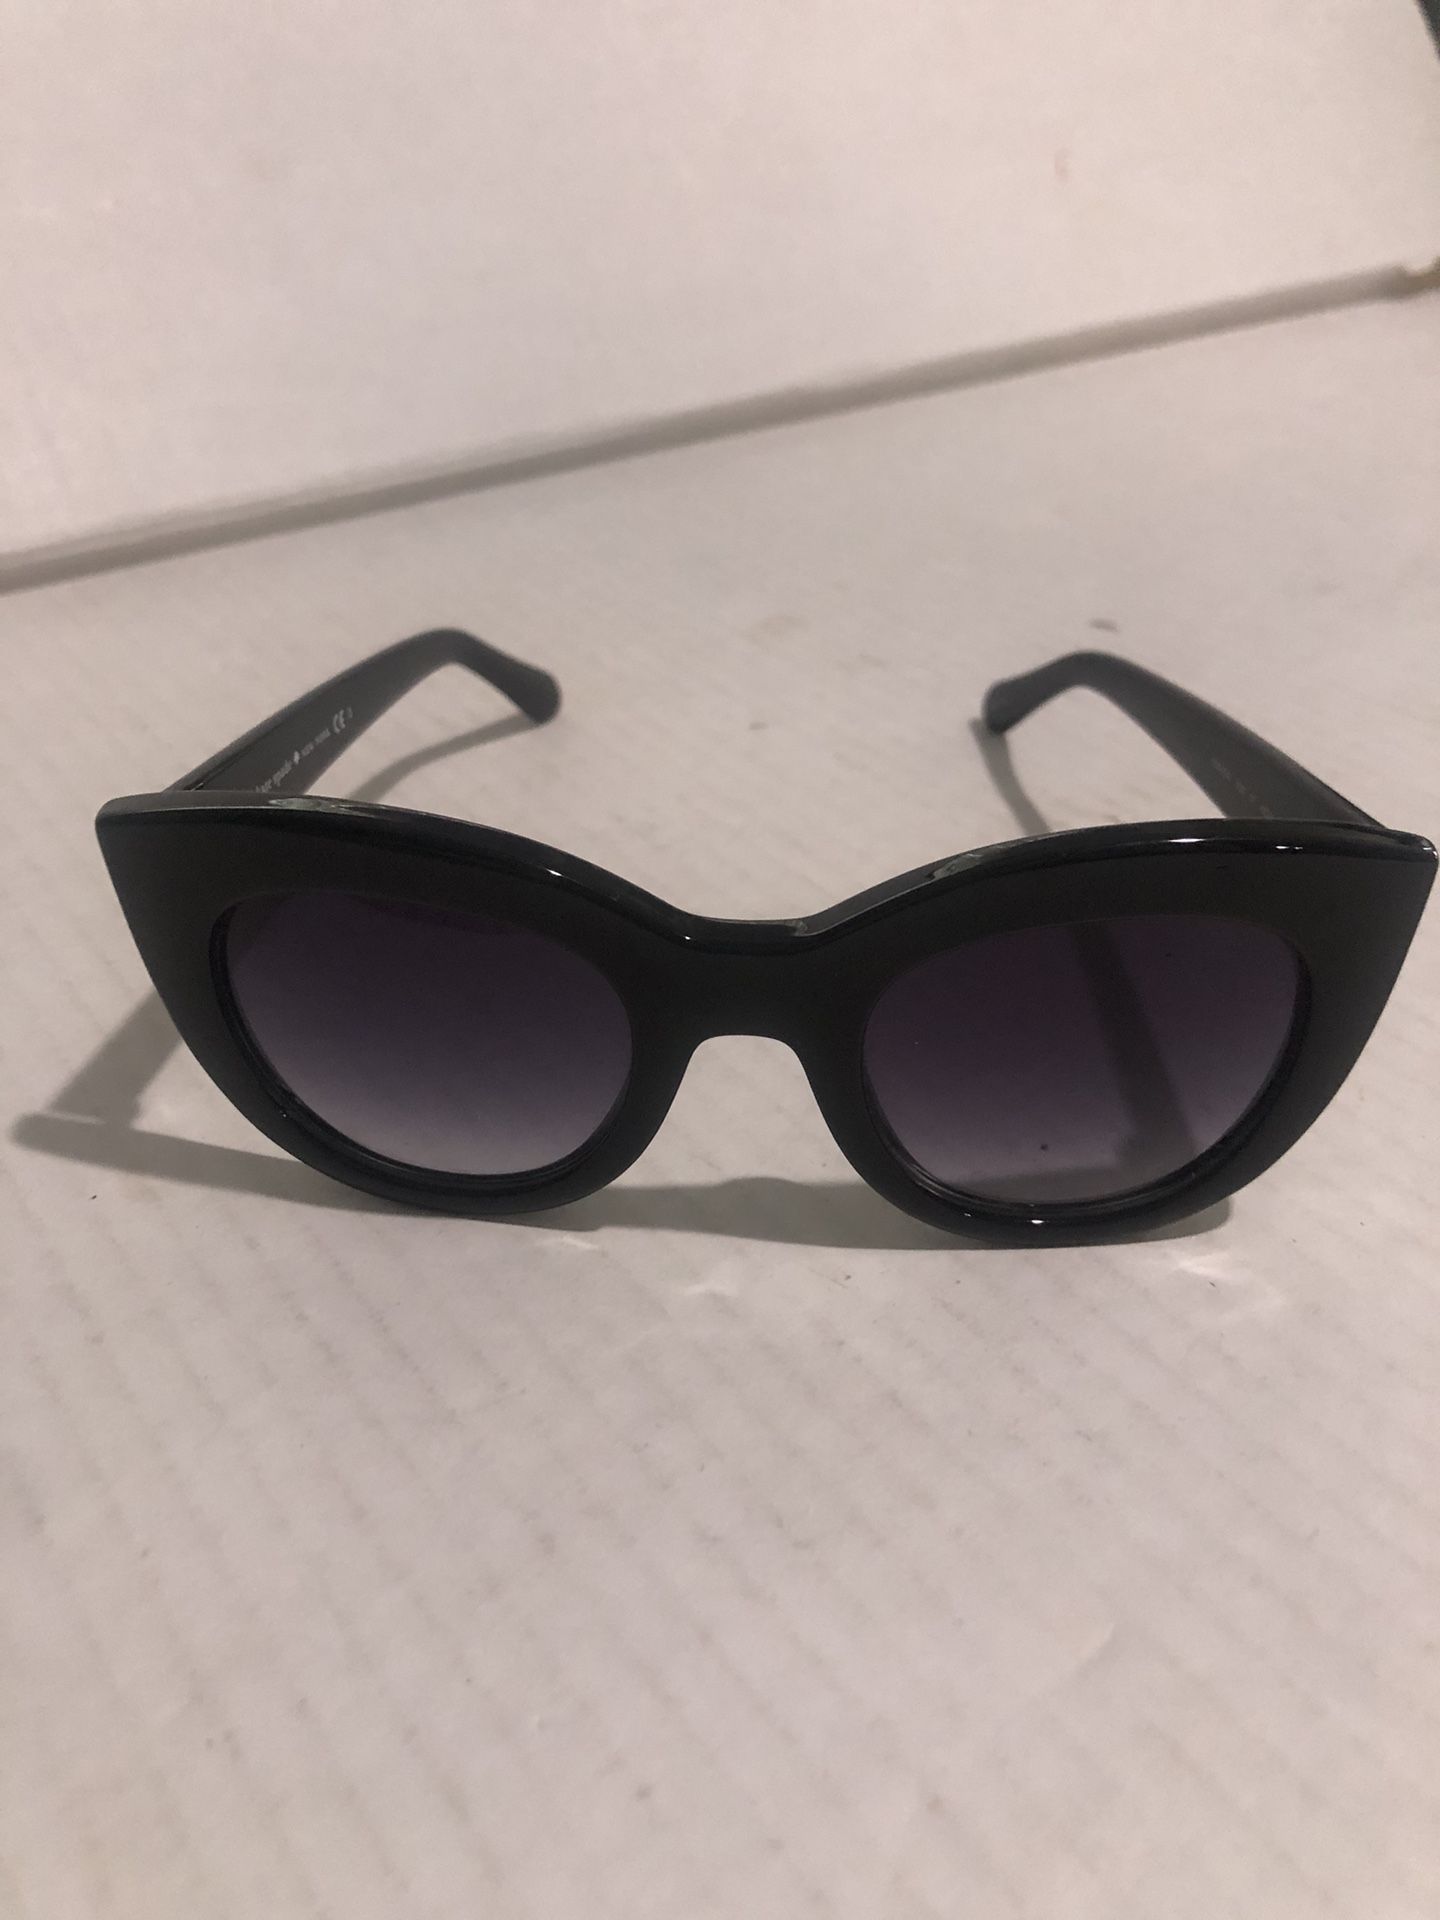 Kate Spade Zora Black Sunglasses  Excellent Condition  No Box 